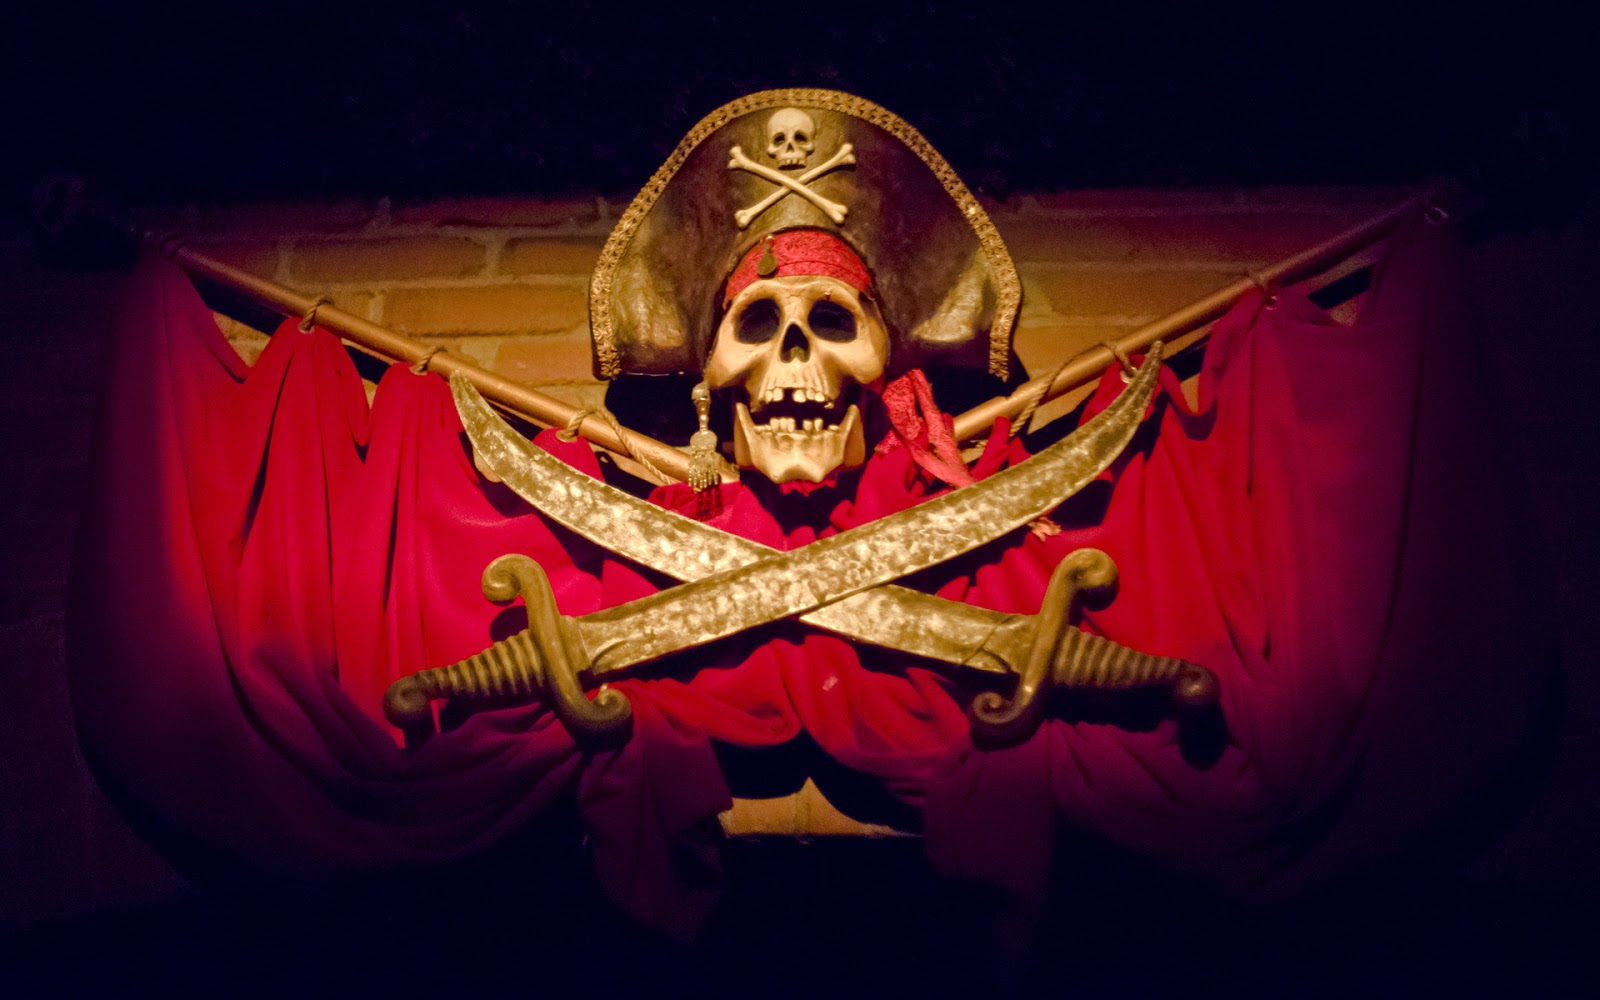 3 Sheets PIRATE Stickers! Jolly Roger Ship Treasure Chest Skull Crossbones